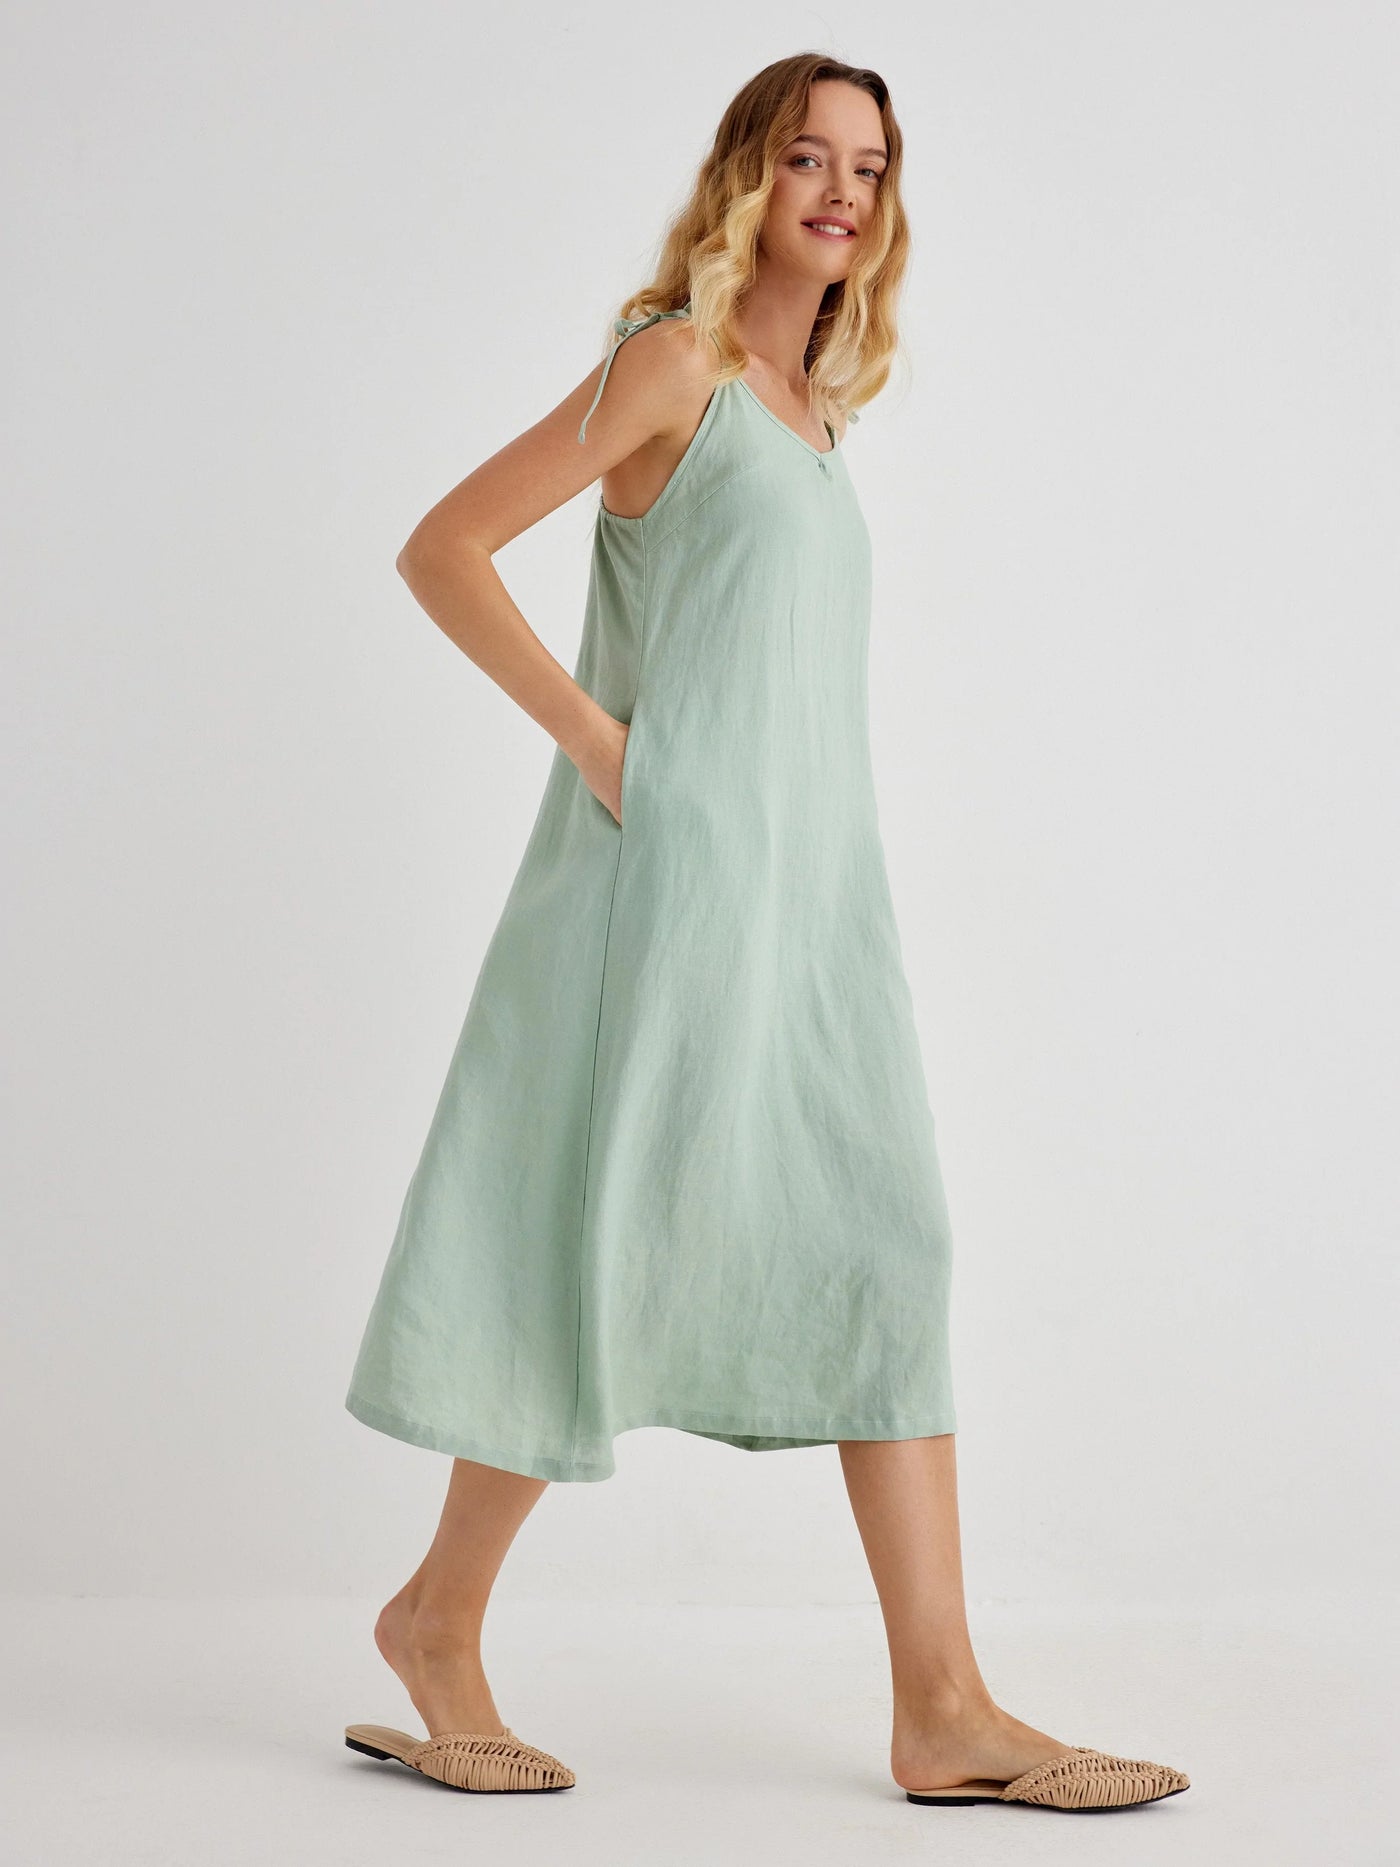 Callie 100% Linen Relaxed Fit Adjustable Straps Slip Dress